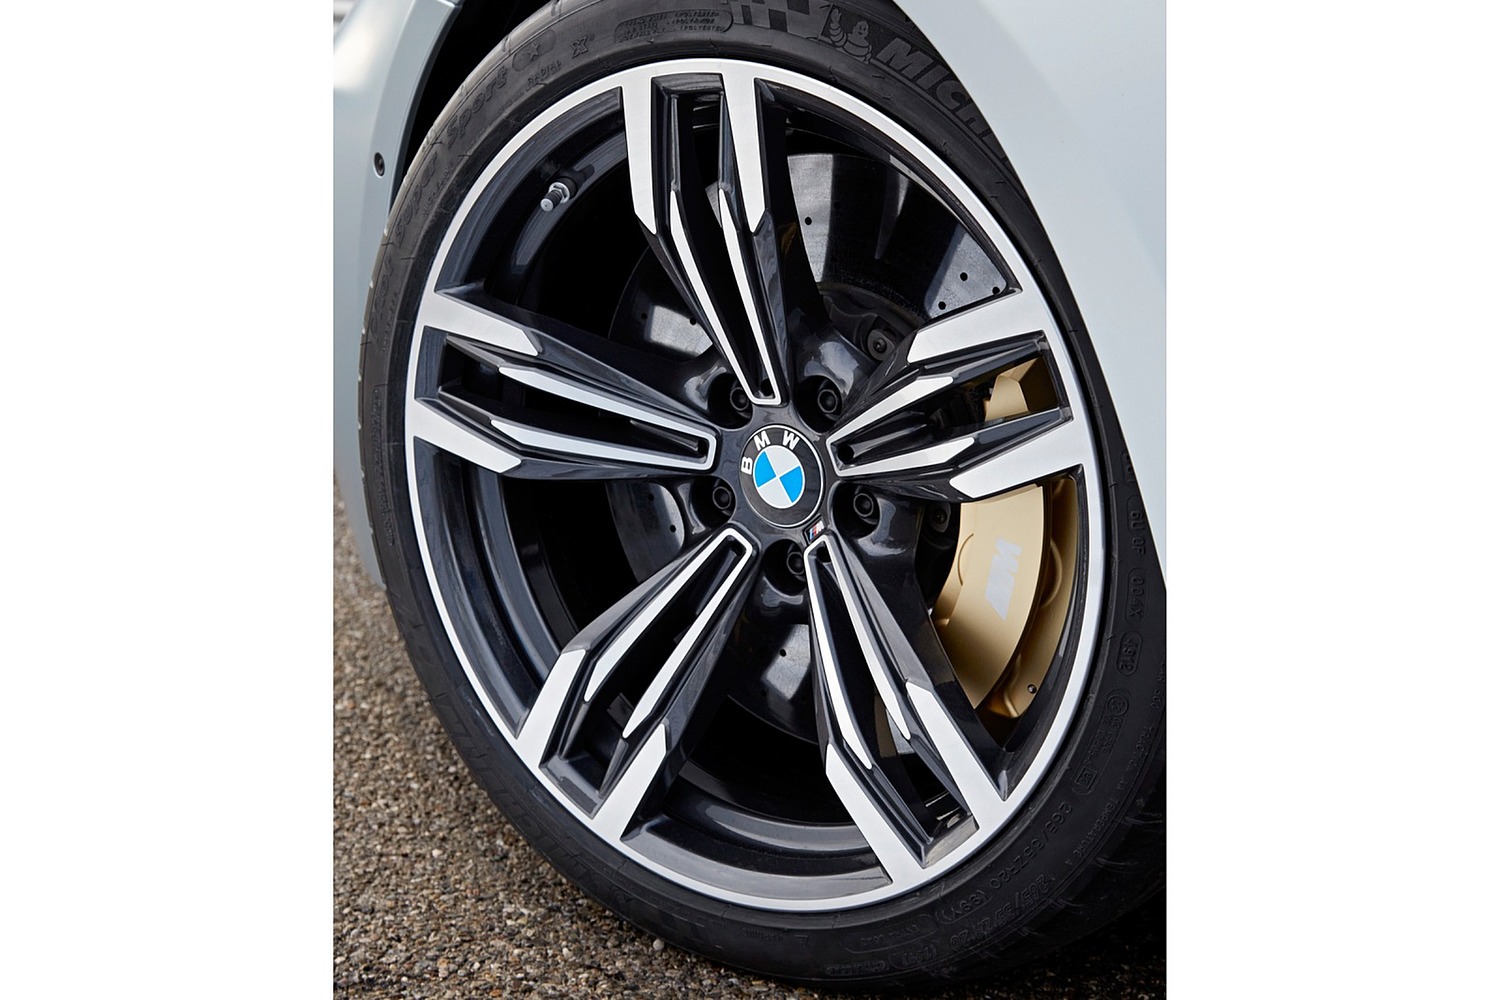 BMW M6 Gran Coupe Sedan Wheel (2017 model year shown)